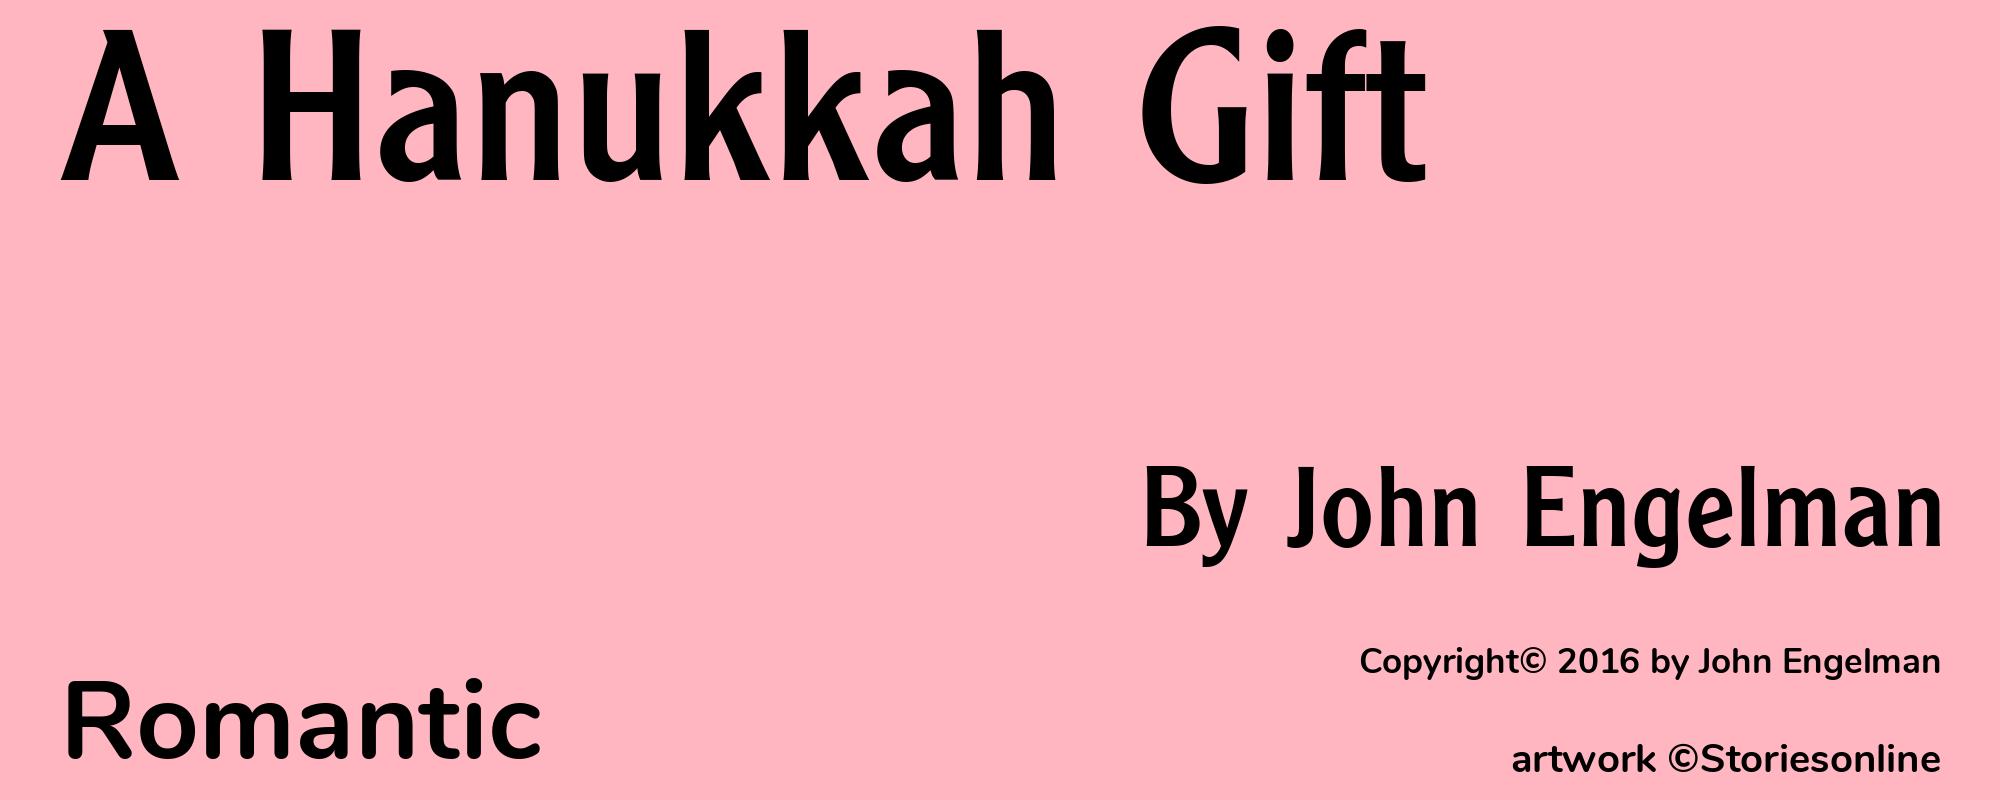 A Hanukkah Gift - Cover